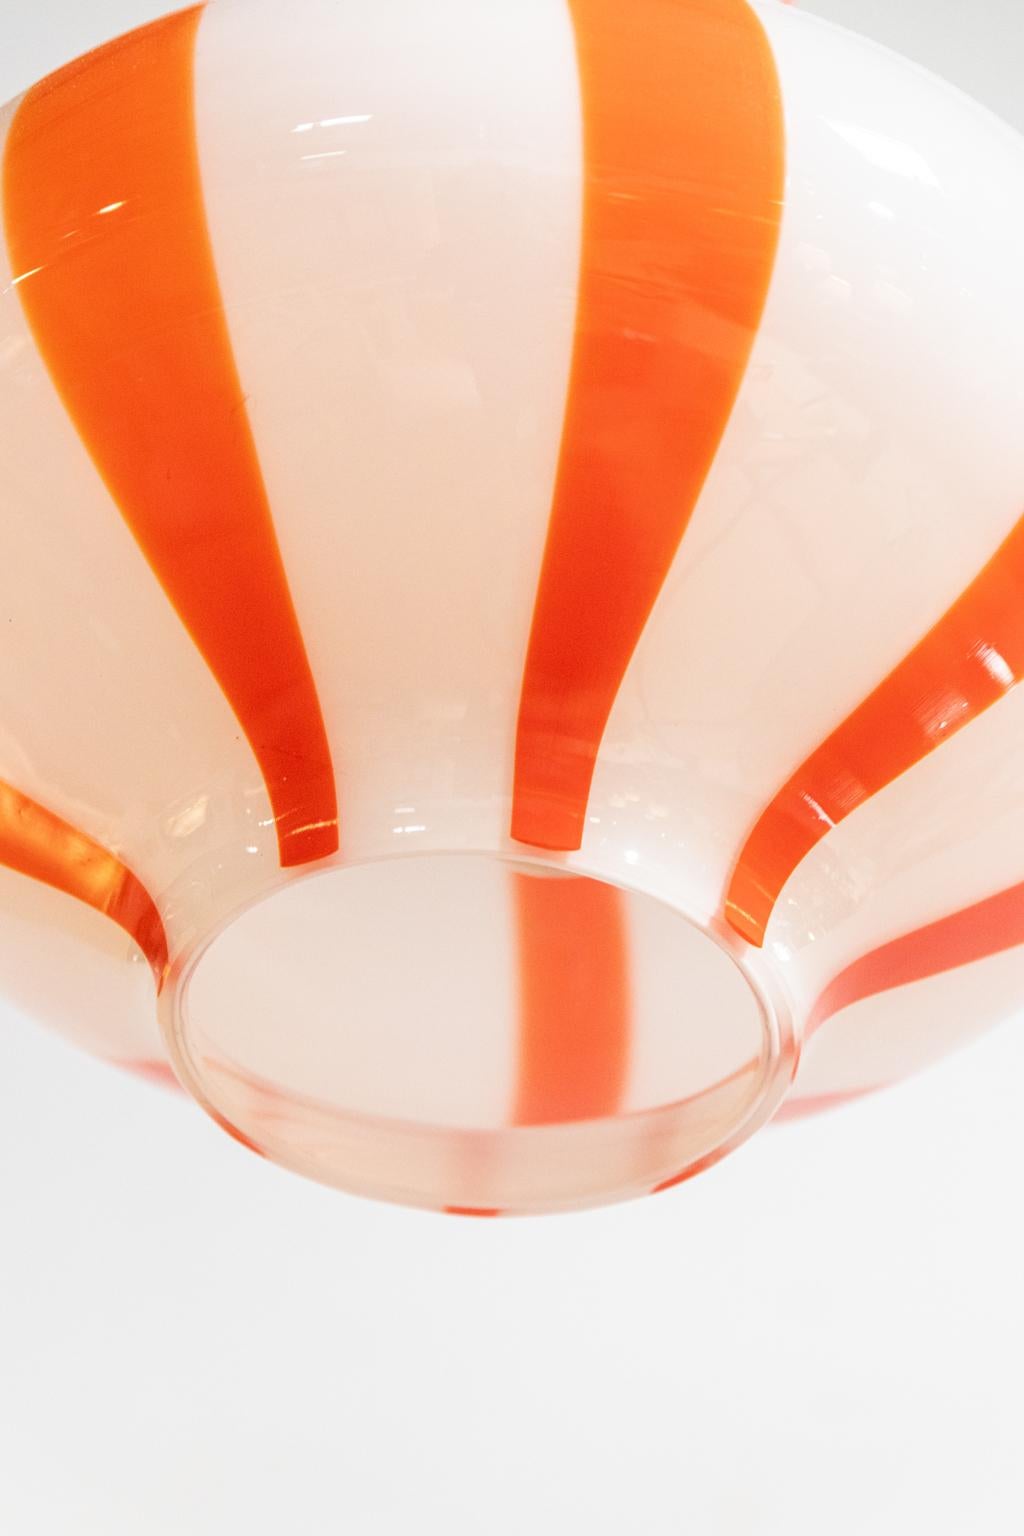 circa 1950s Murano Hanging Glass in Orange and White For Sale 2